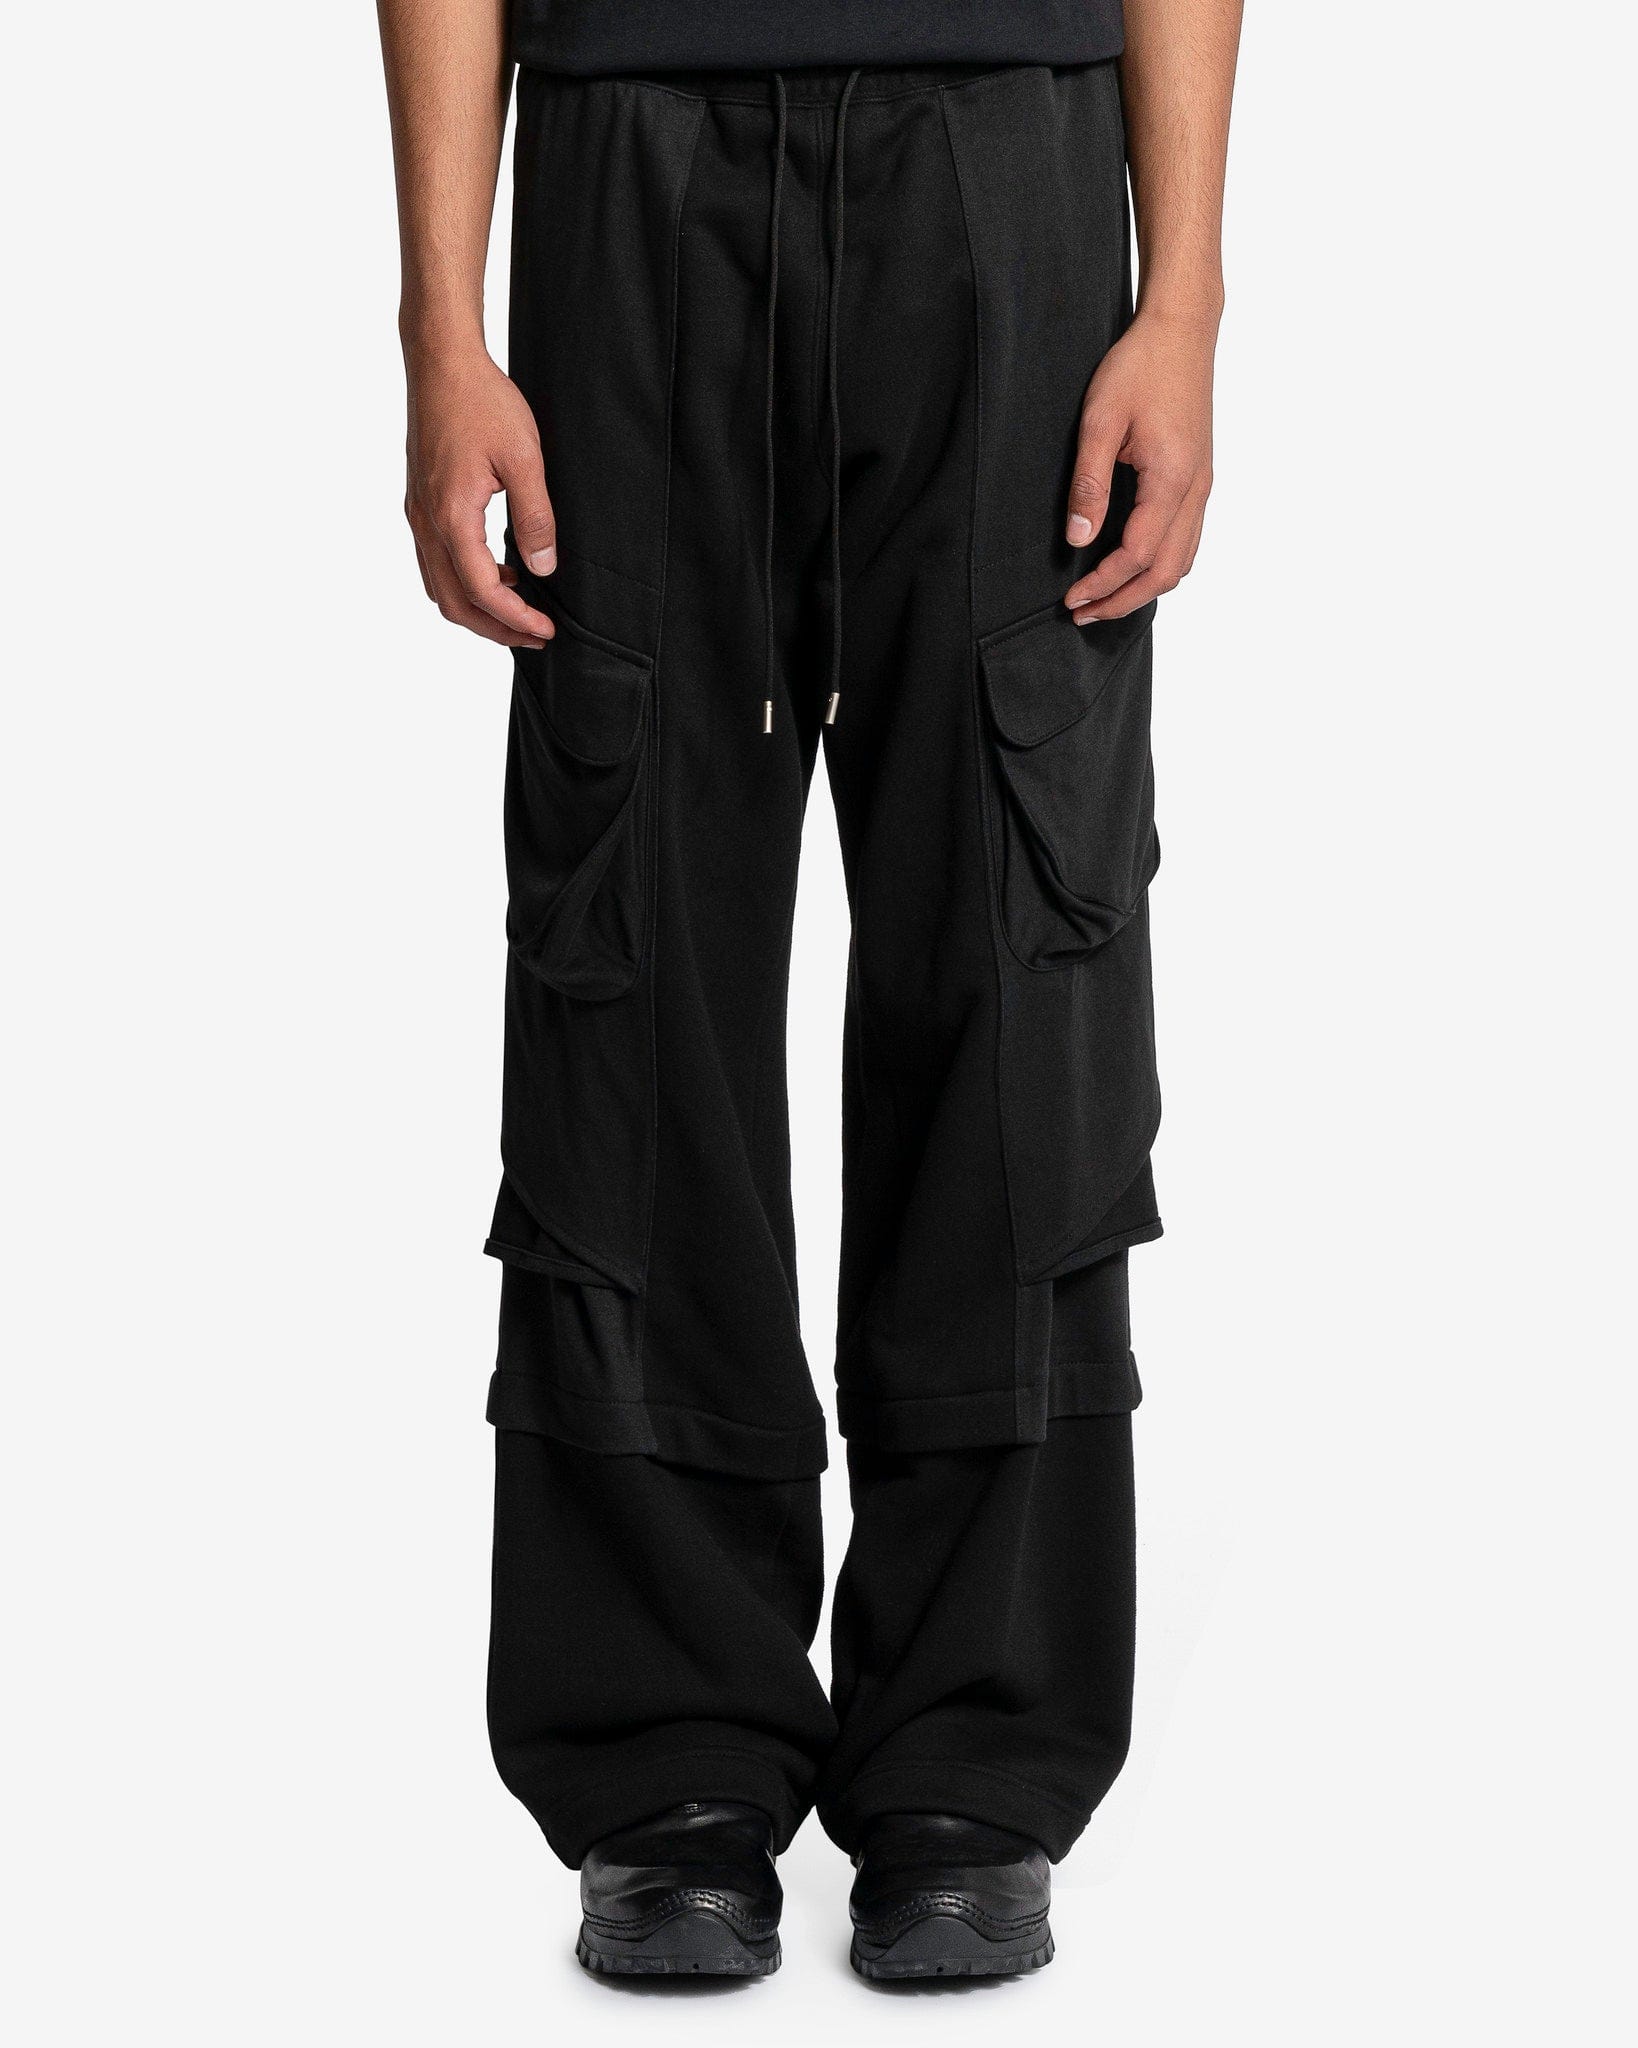 JiyongKim Men's Pants Multi-Pocket Sweatpants in Black Jersey